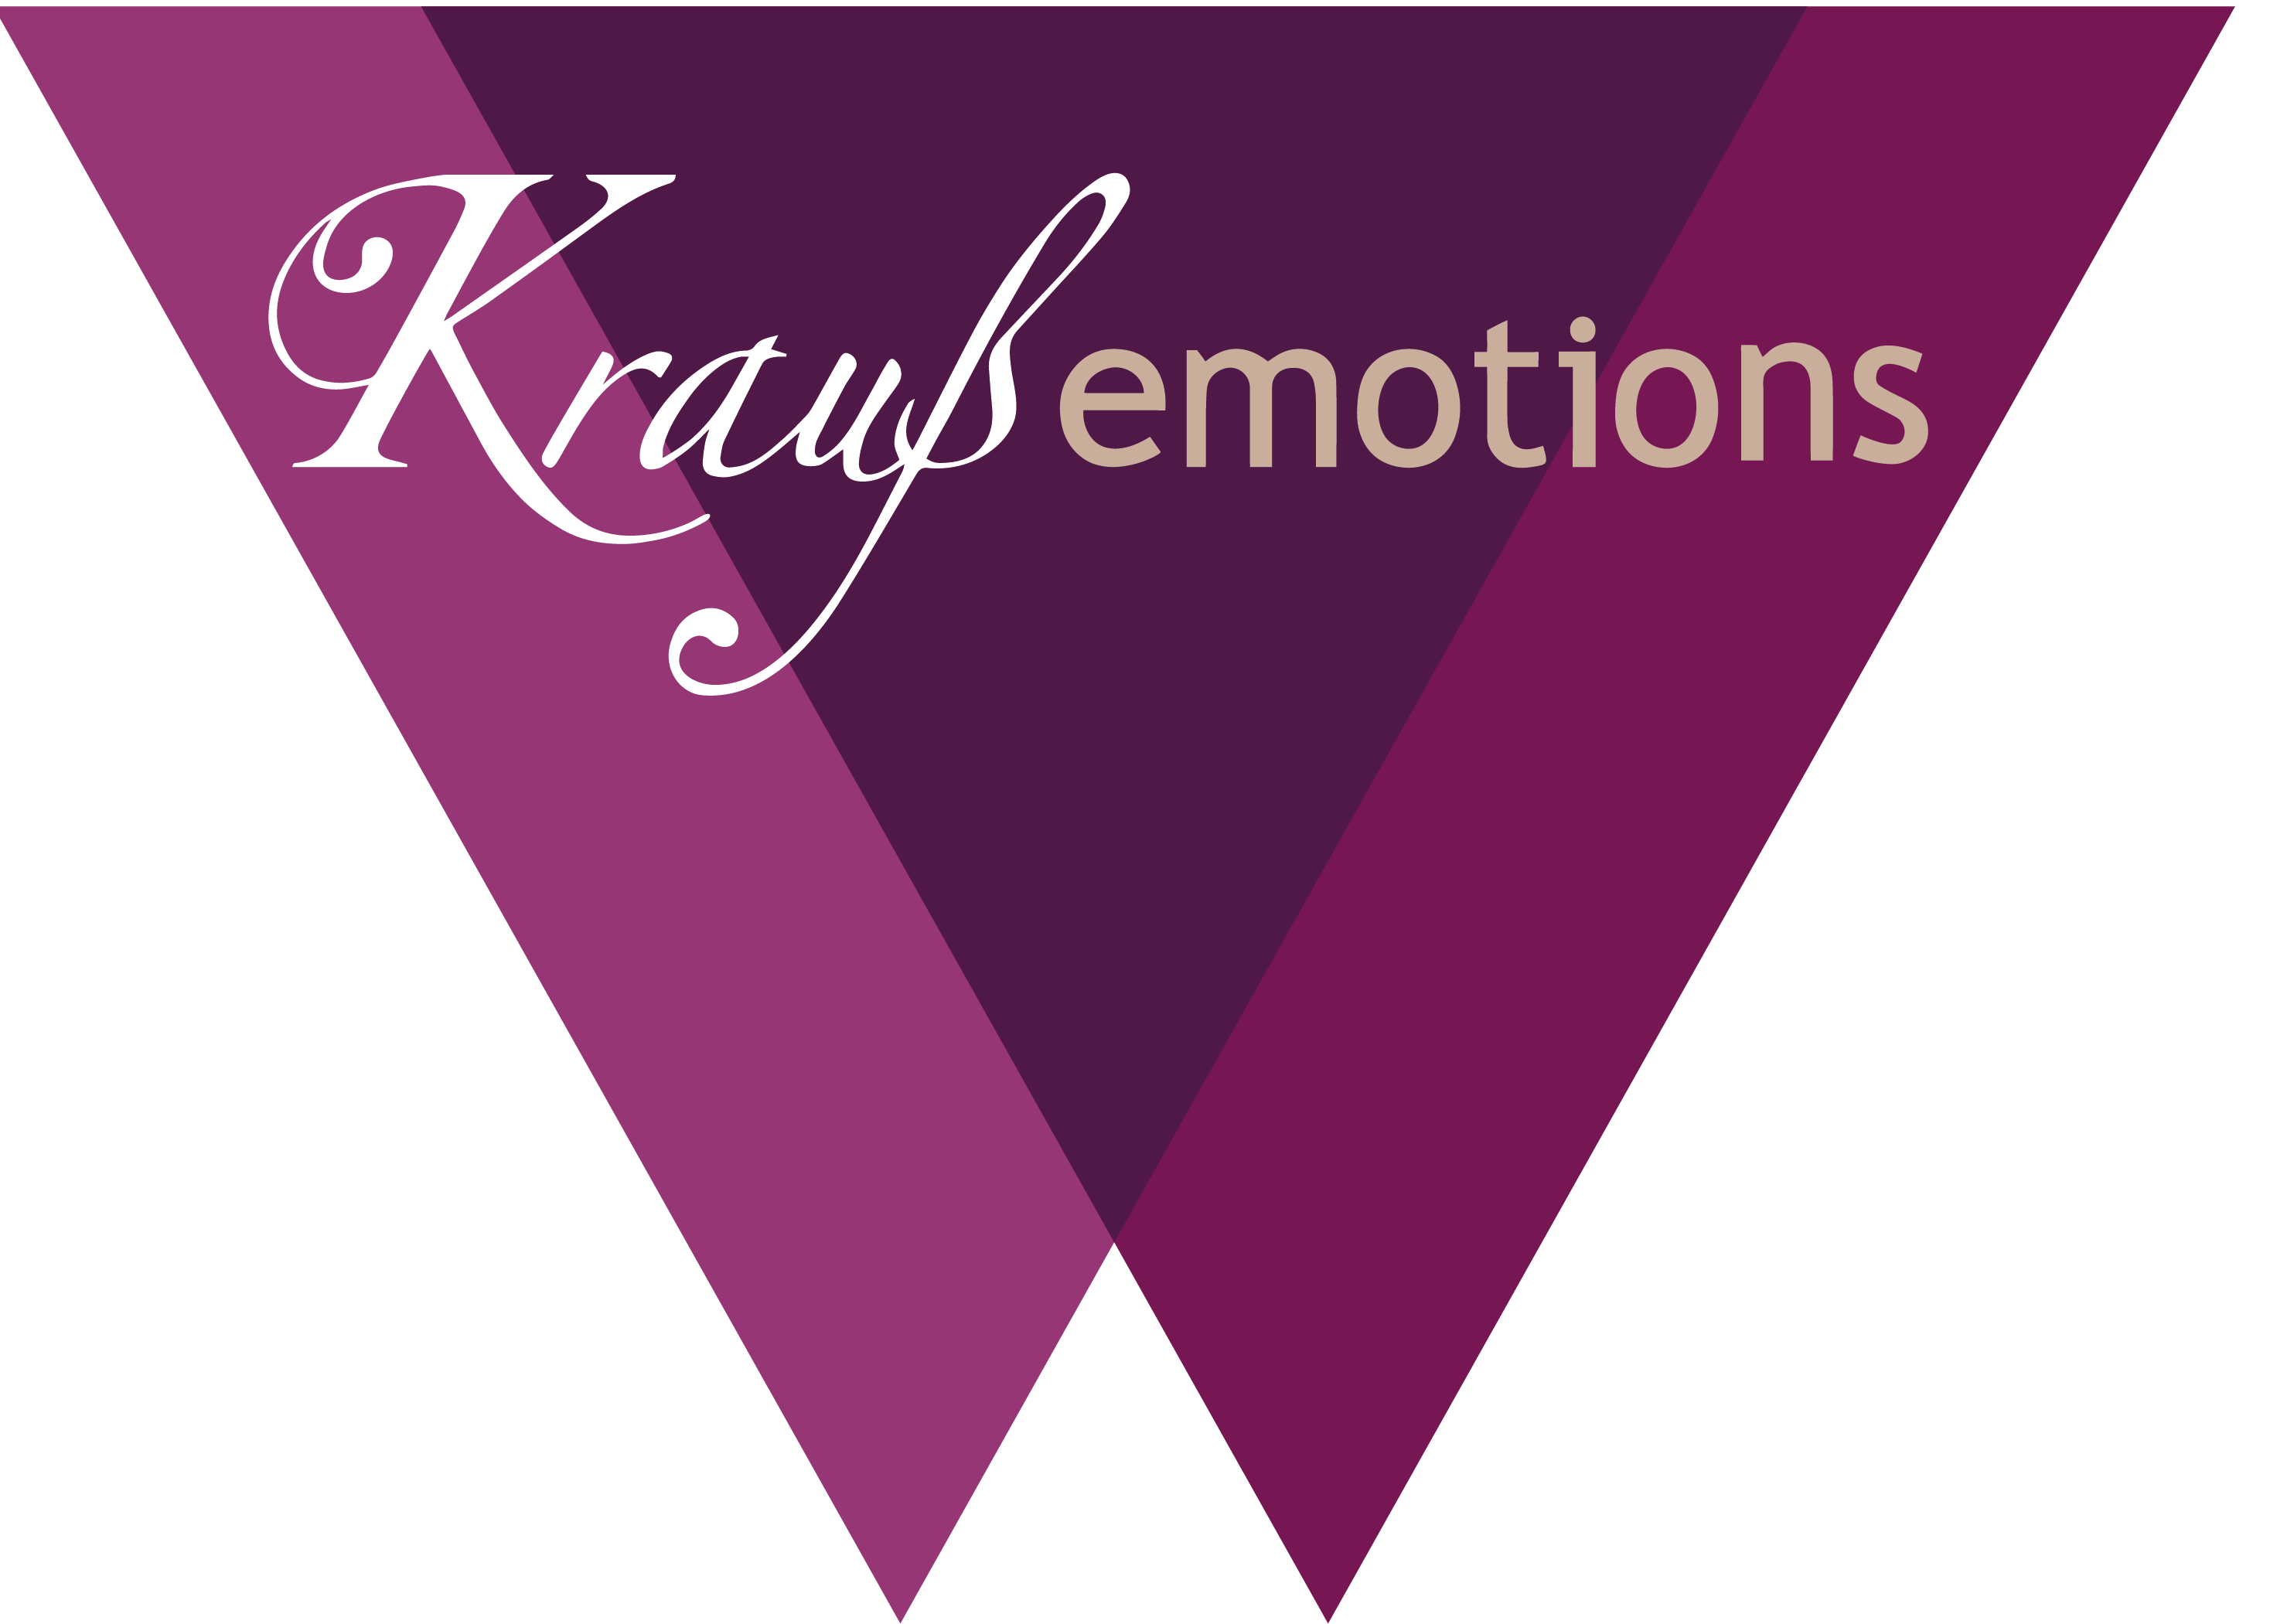 Krauß emotions logo